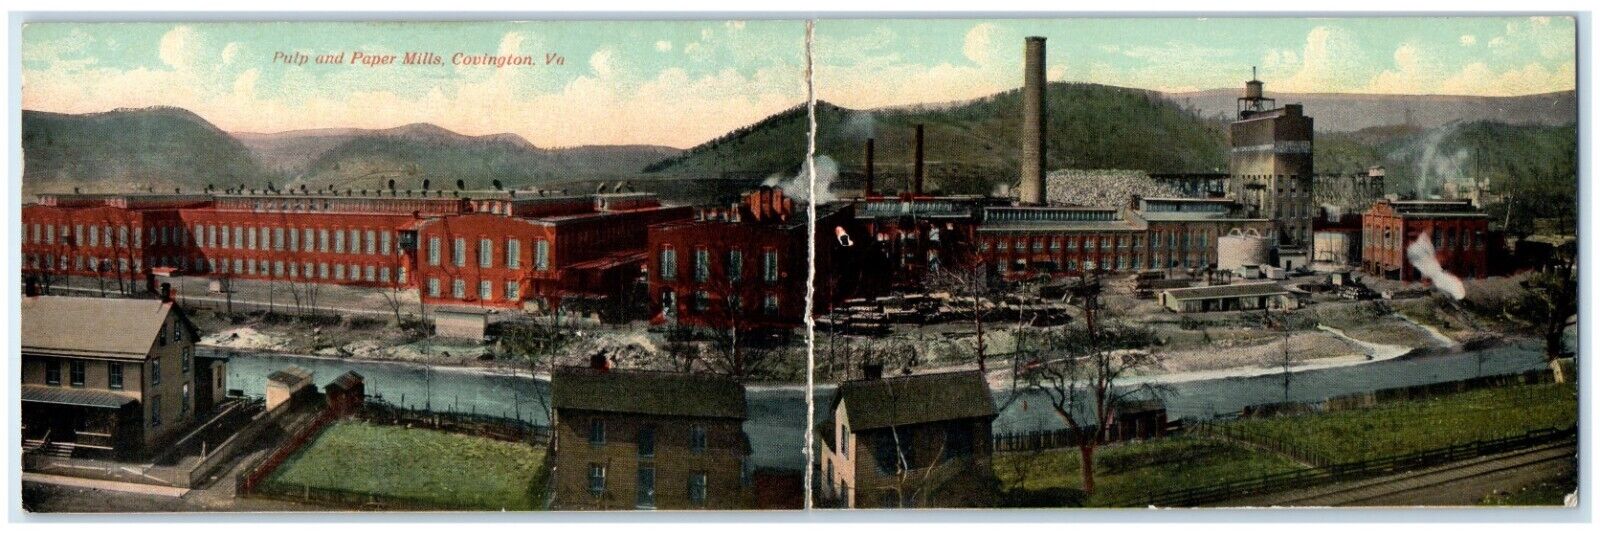 c1905 View Of Pulp And Paper Mills Covington Virginia VA Antique Postcard